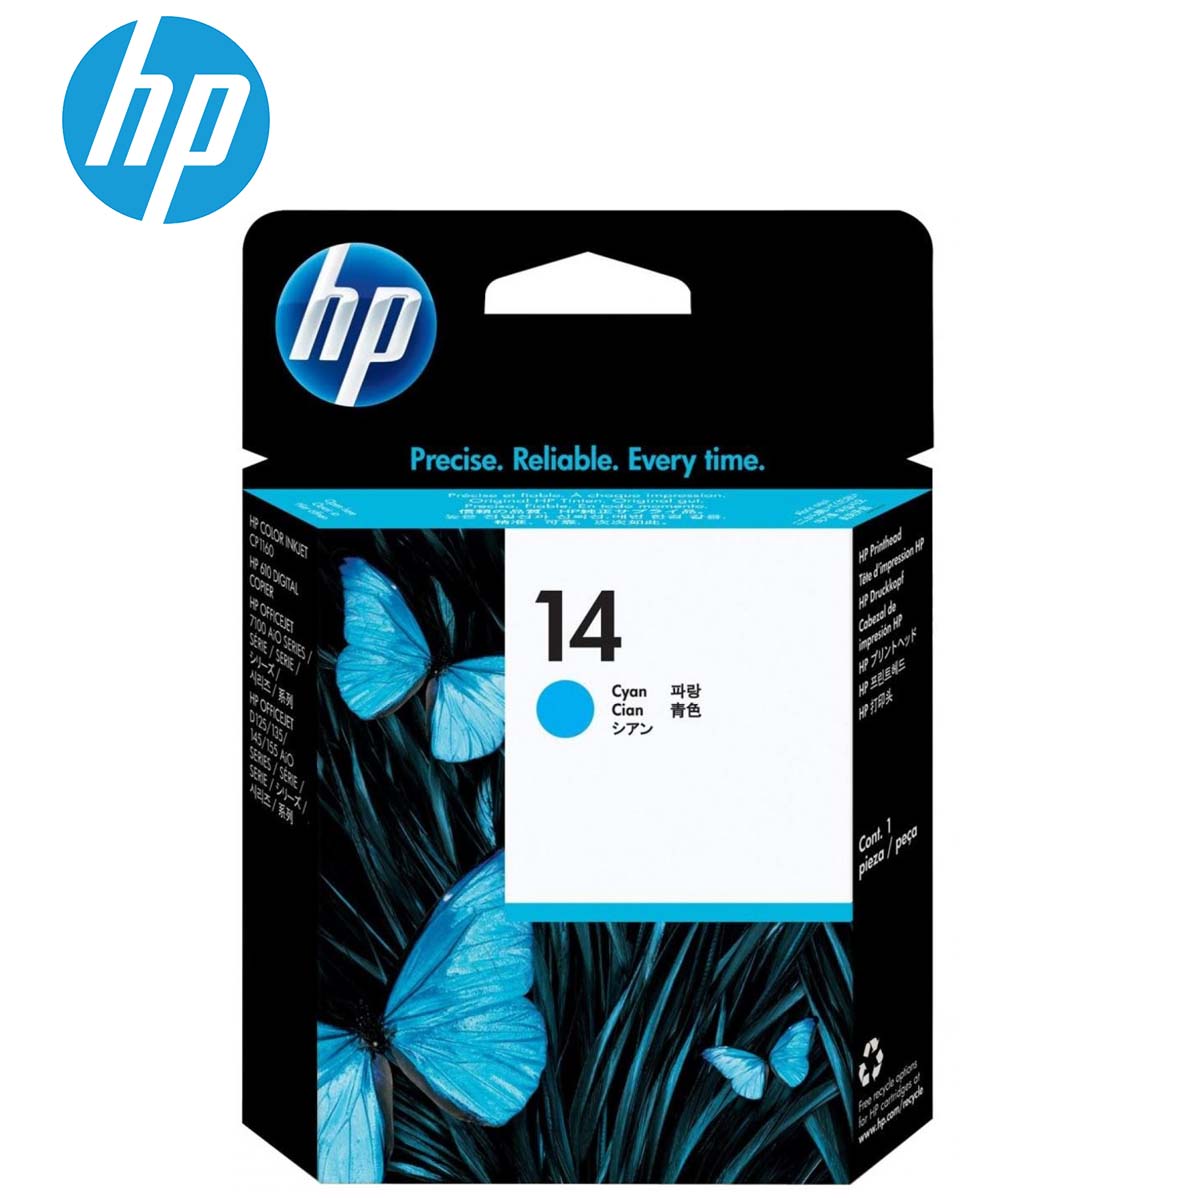 HP C4921A Printerhead Cyan (Original)